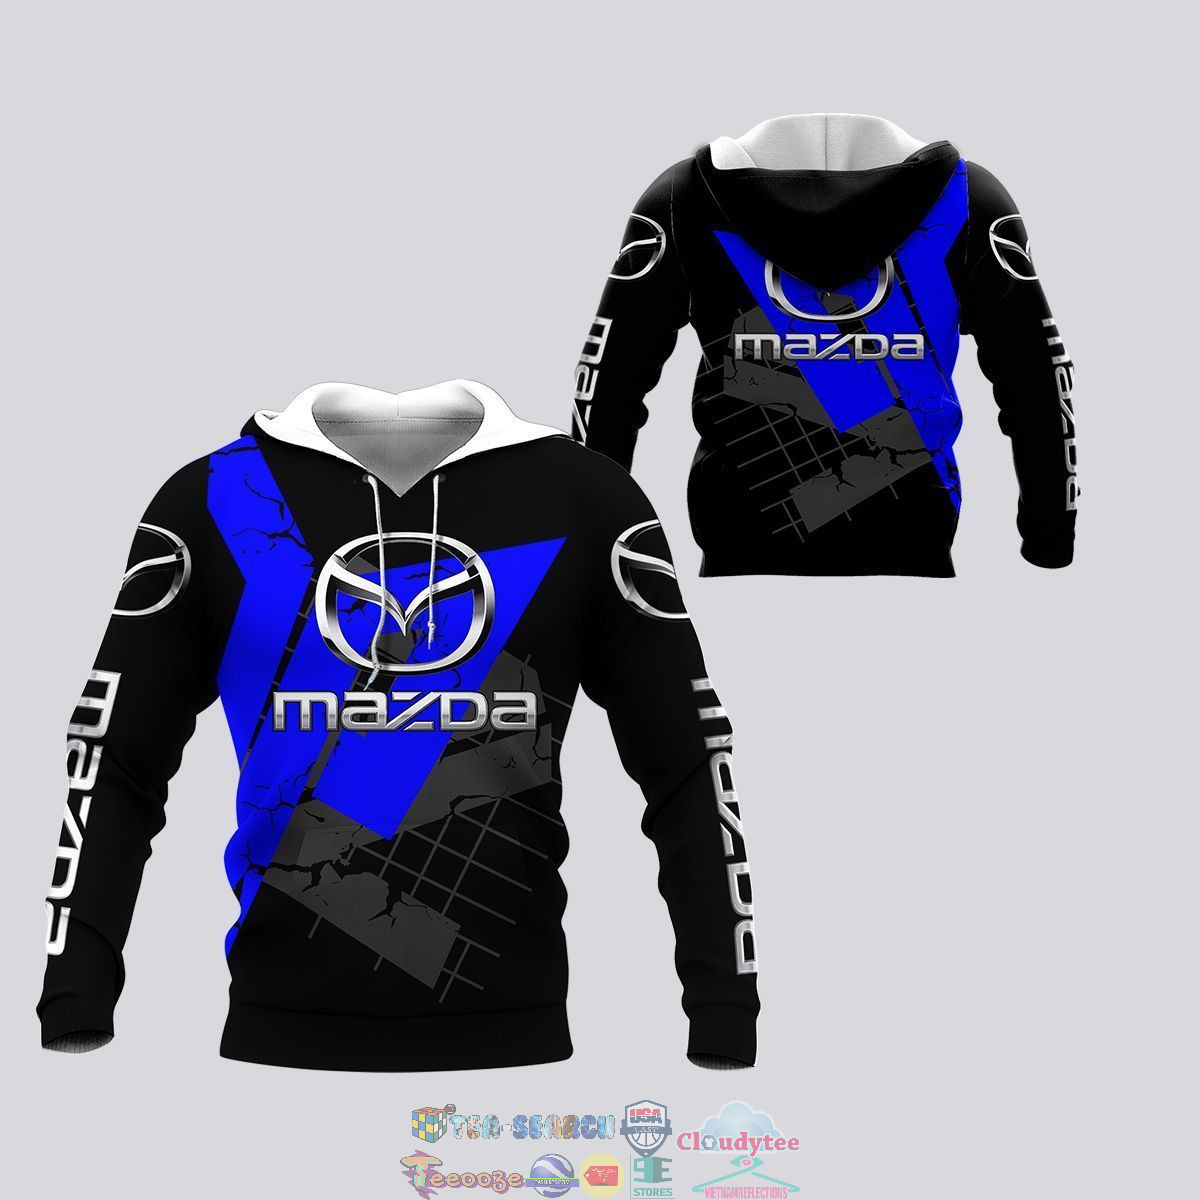 Mazda ver 14 3D hoodie and t-shirt – Saleoff